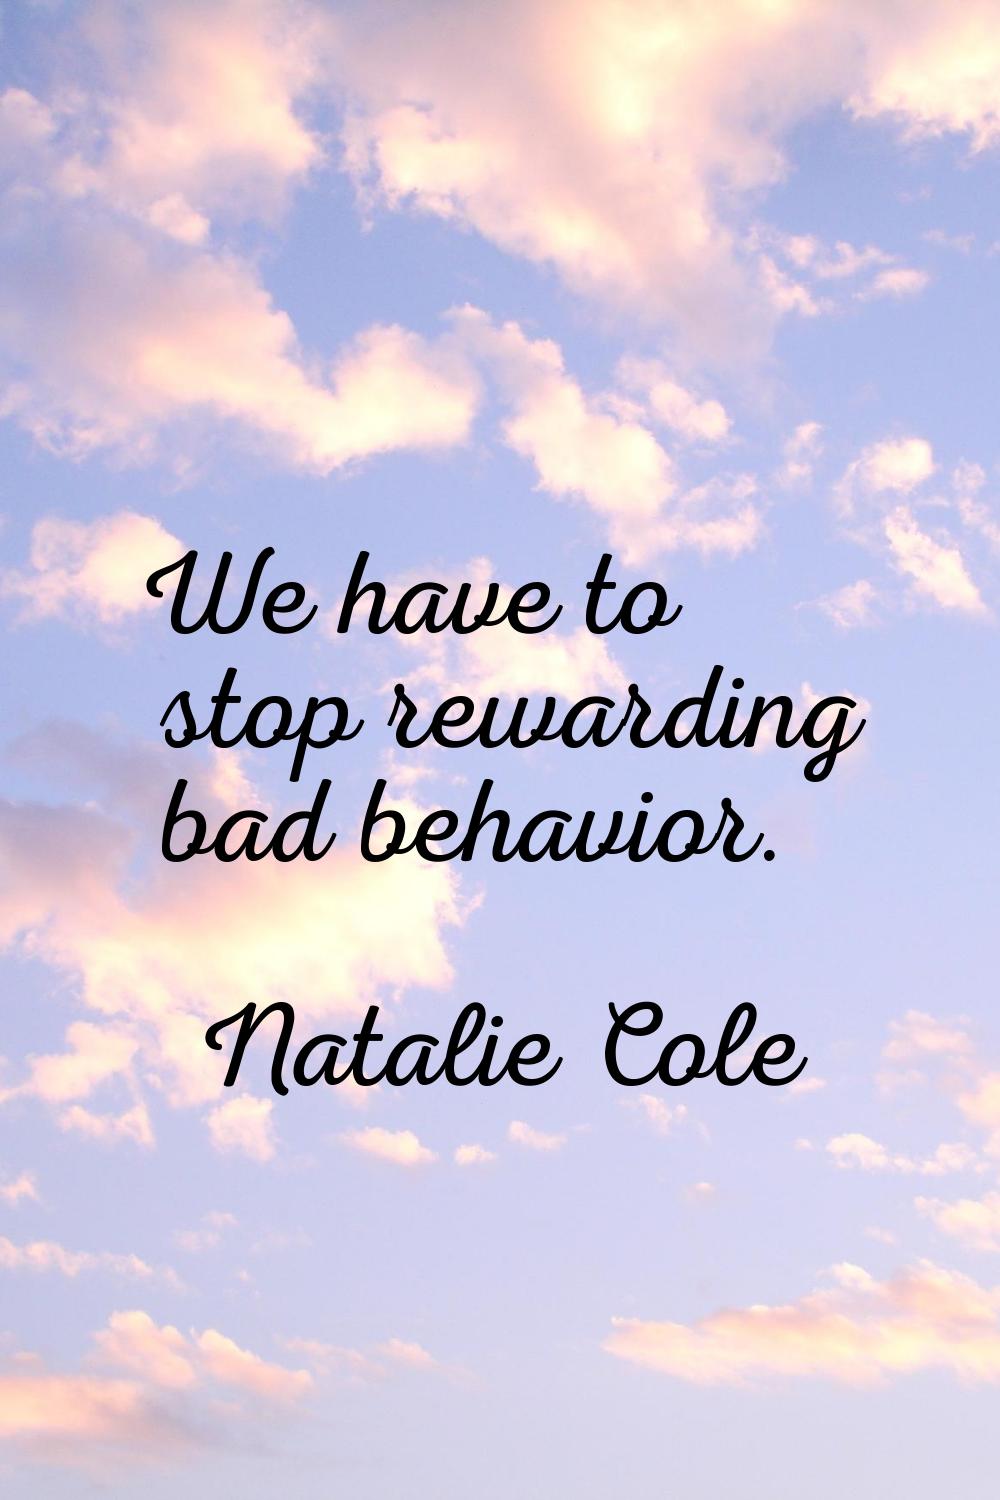 We have to stop rewarding bad behavior.